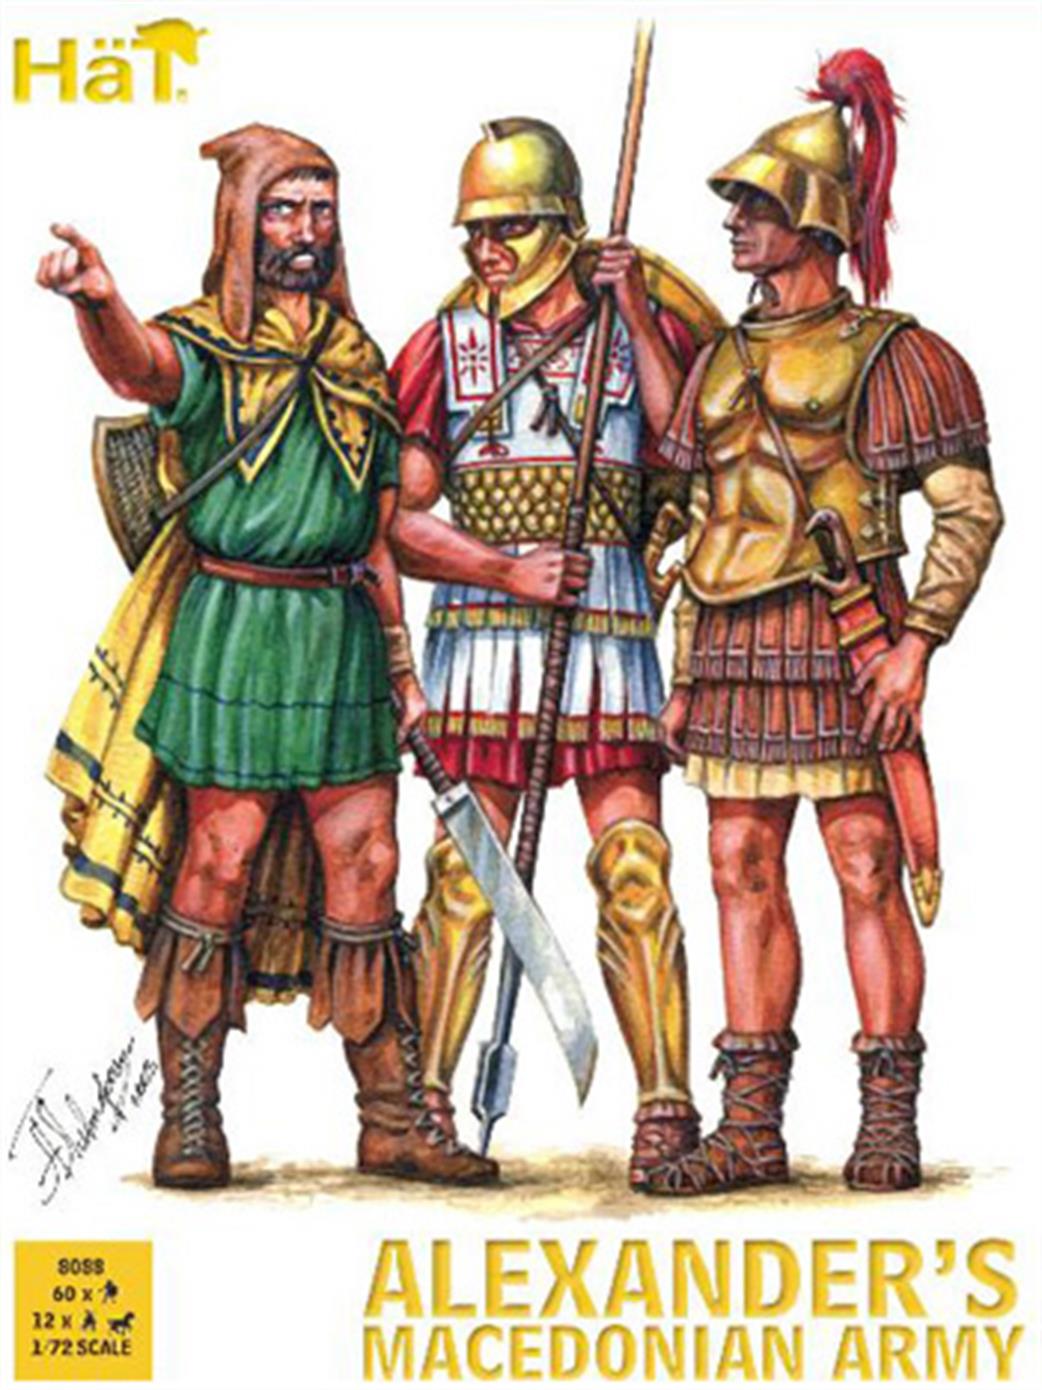 Hat 1/72 8088 Alexander's Macedonian Army